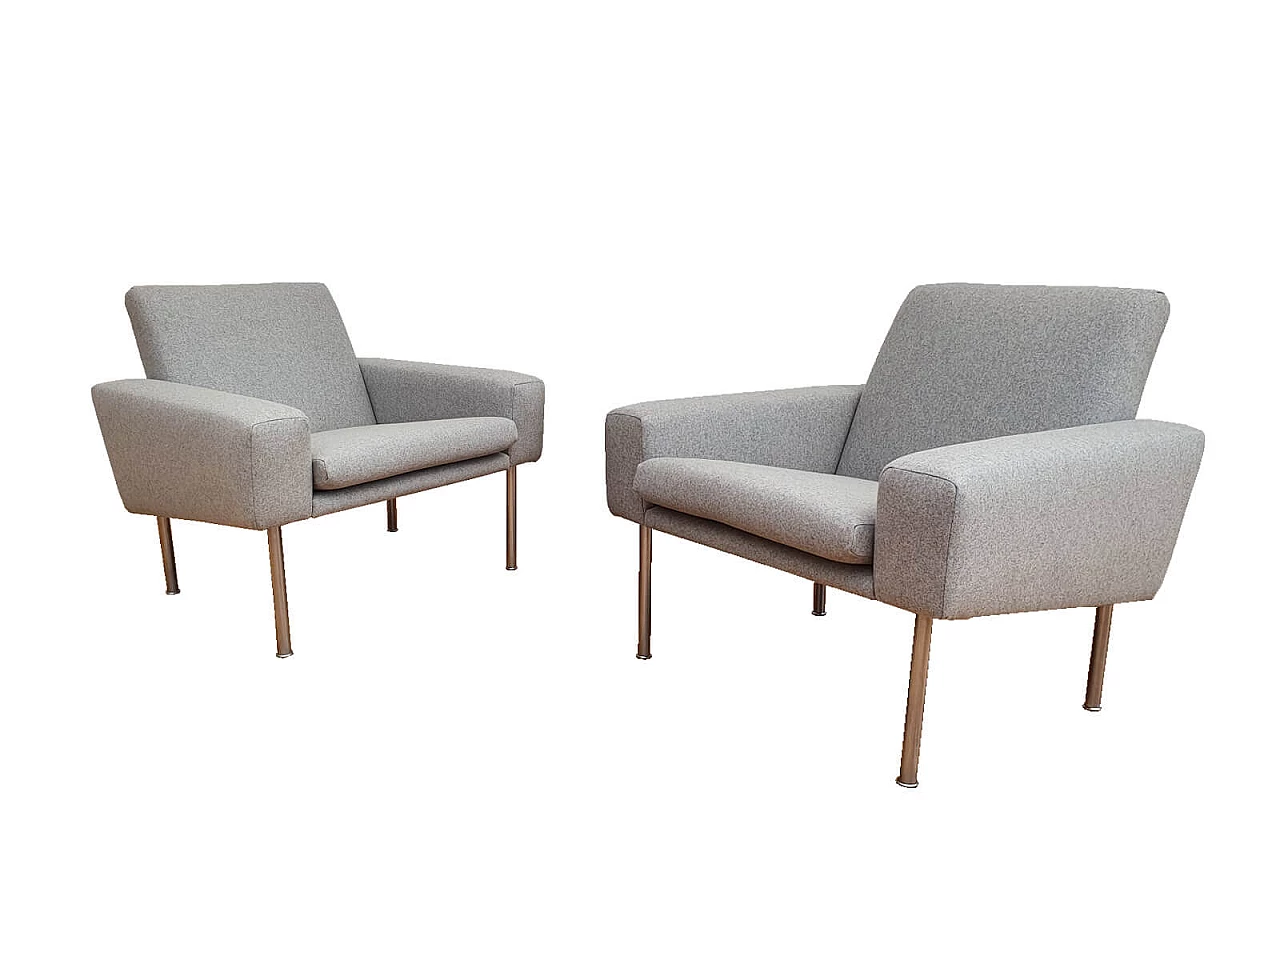 Pair of armchairs, by Hans J. Wegner, "Airport", model AP 34/1 1066790